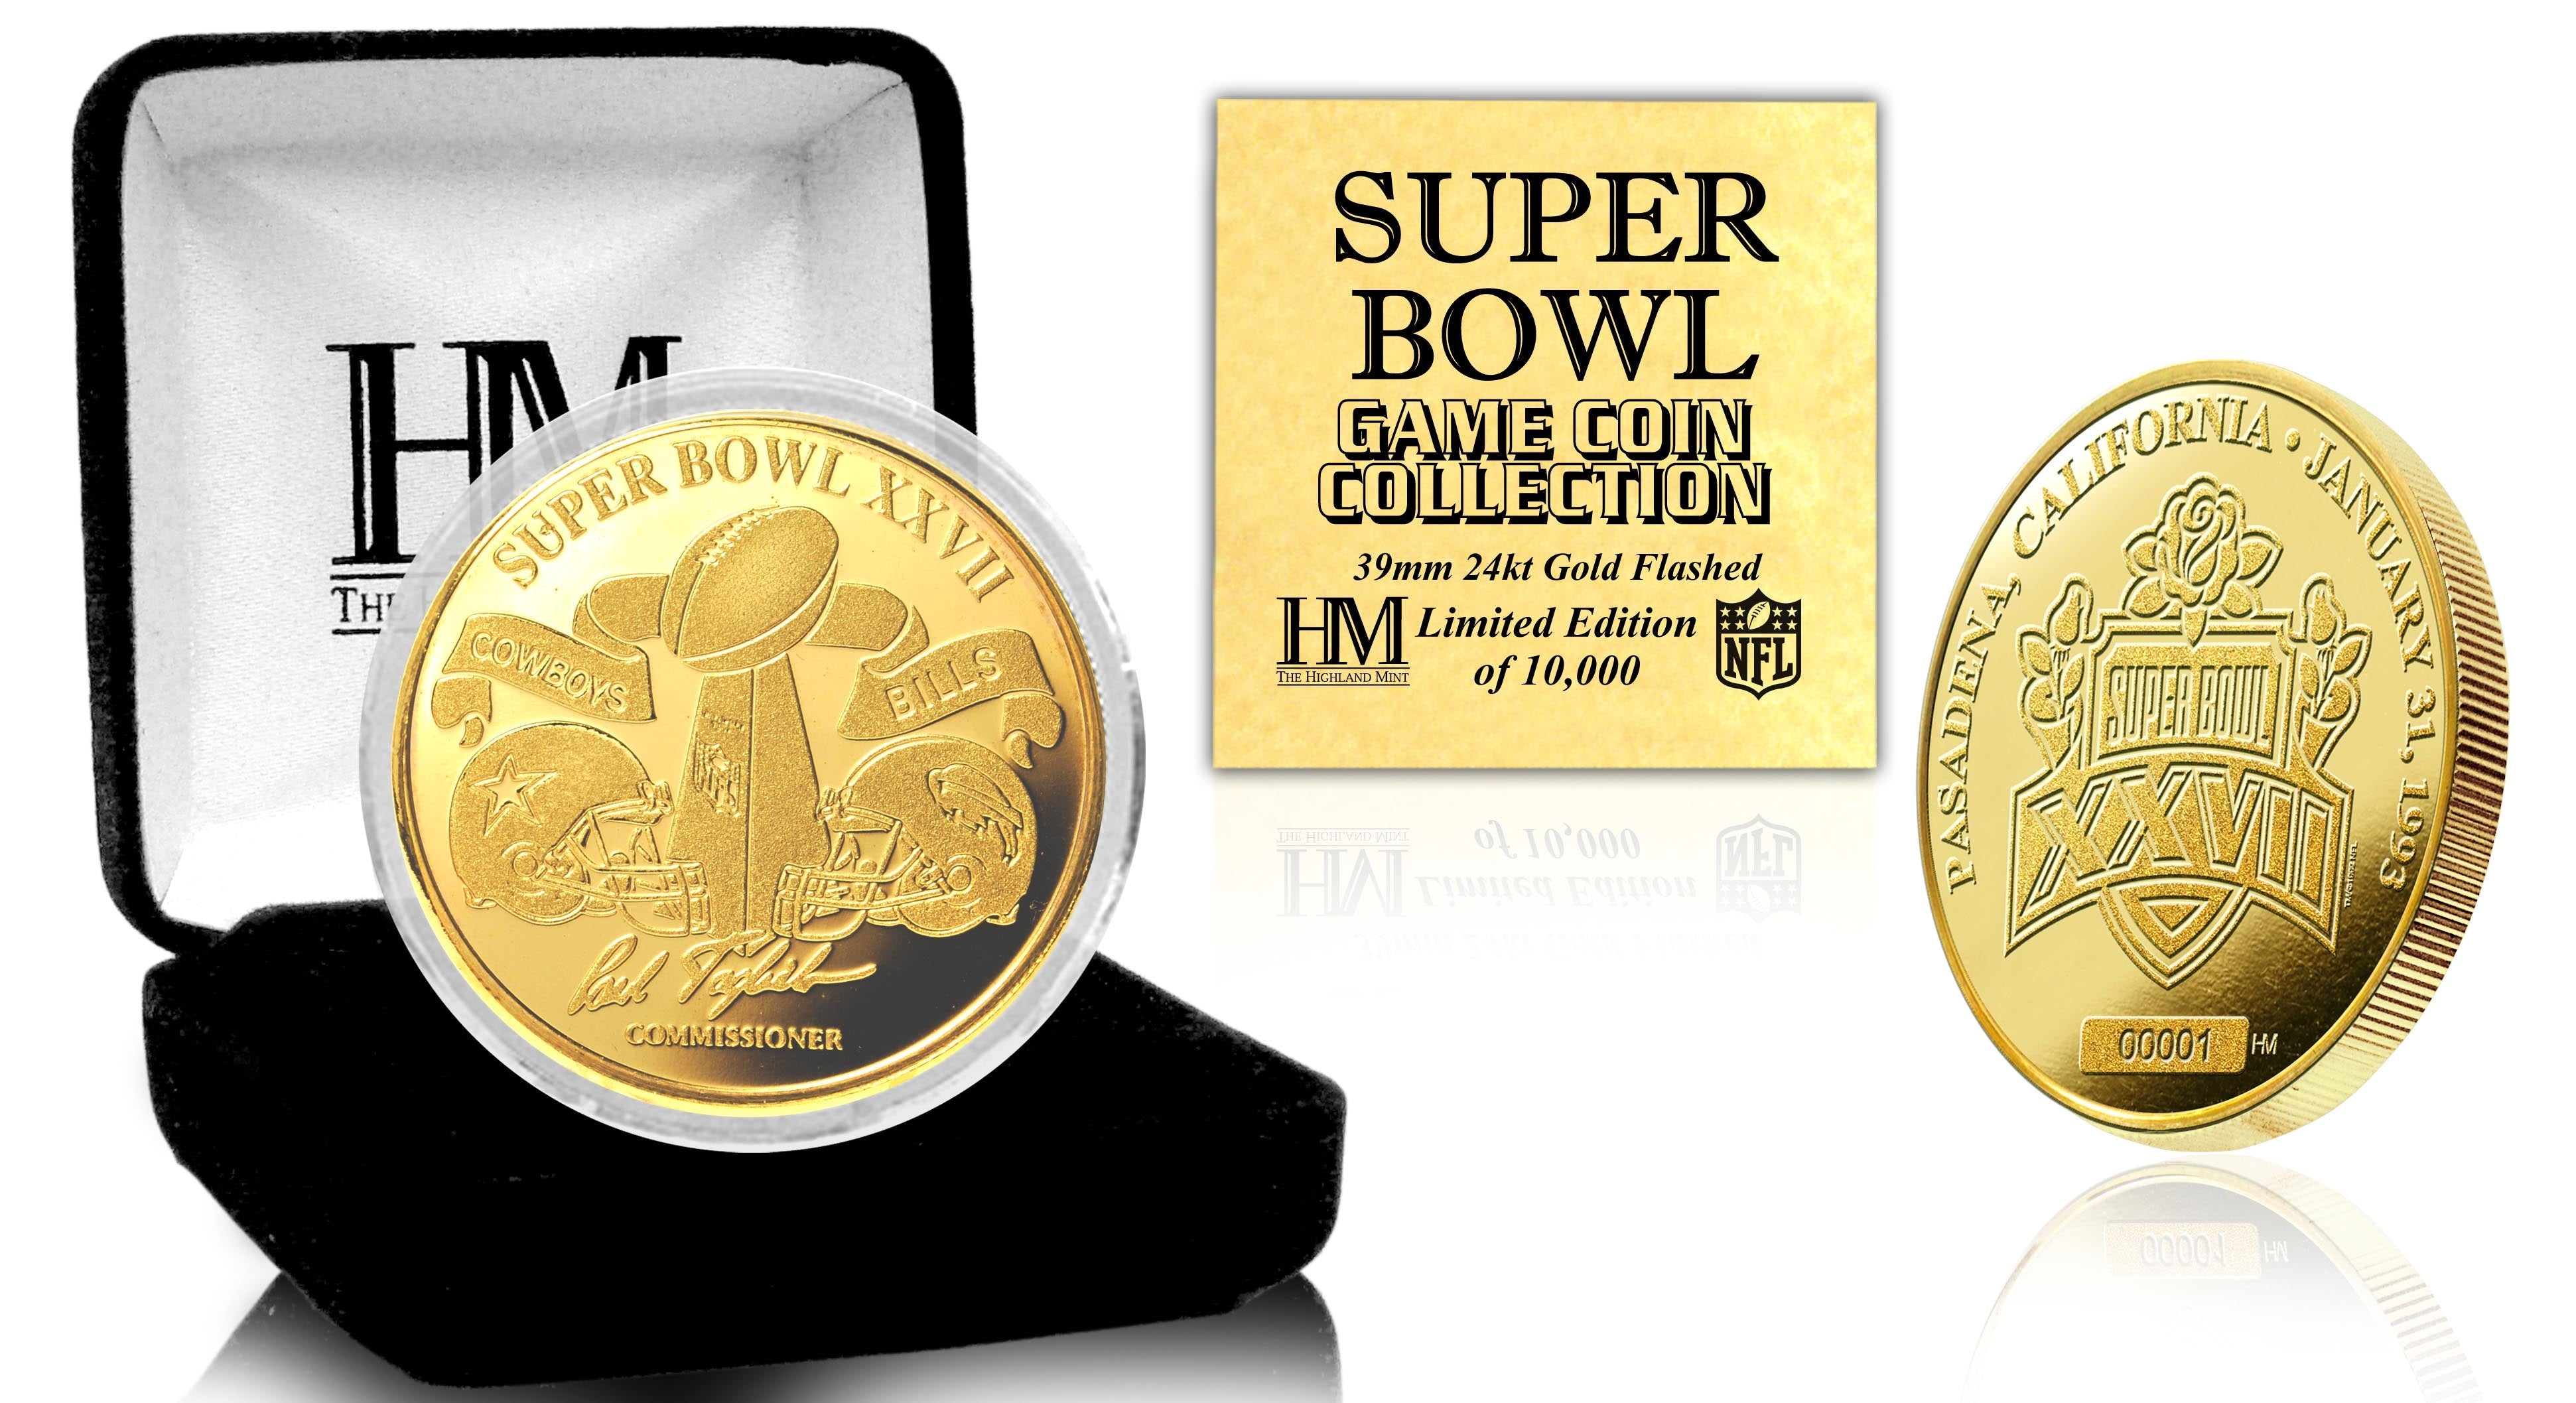 Super Bowl XXVII 24kt Gold Flip Coin